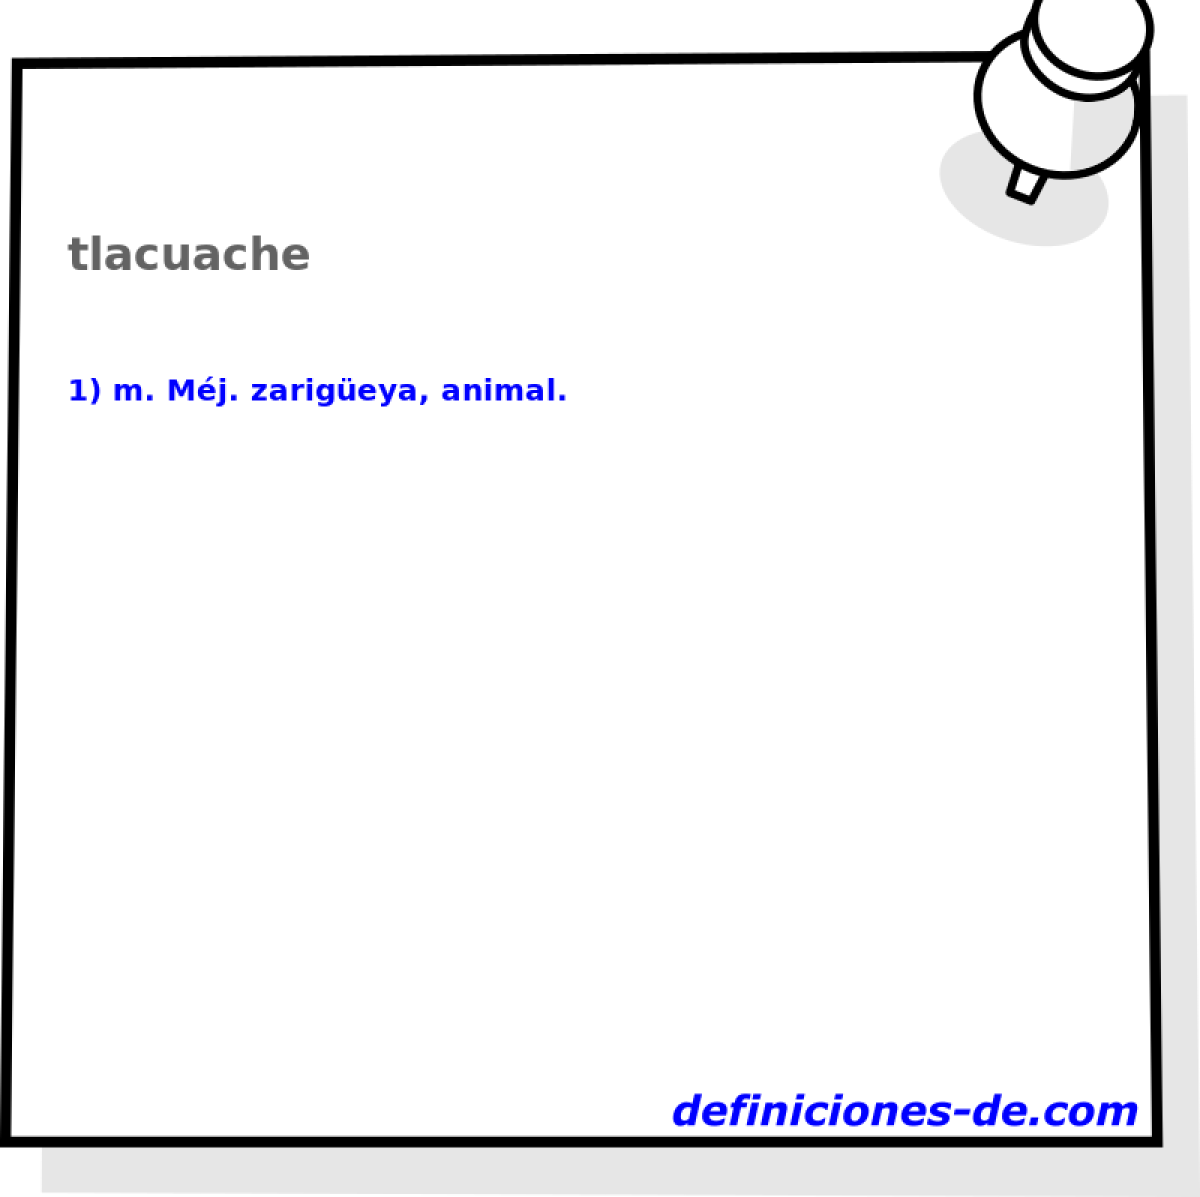 tlacuache 